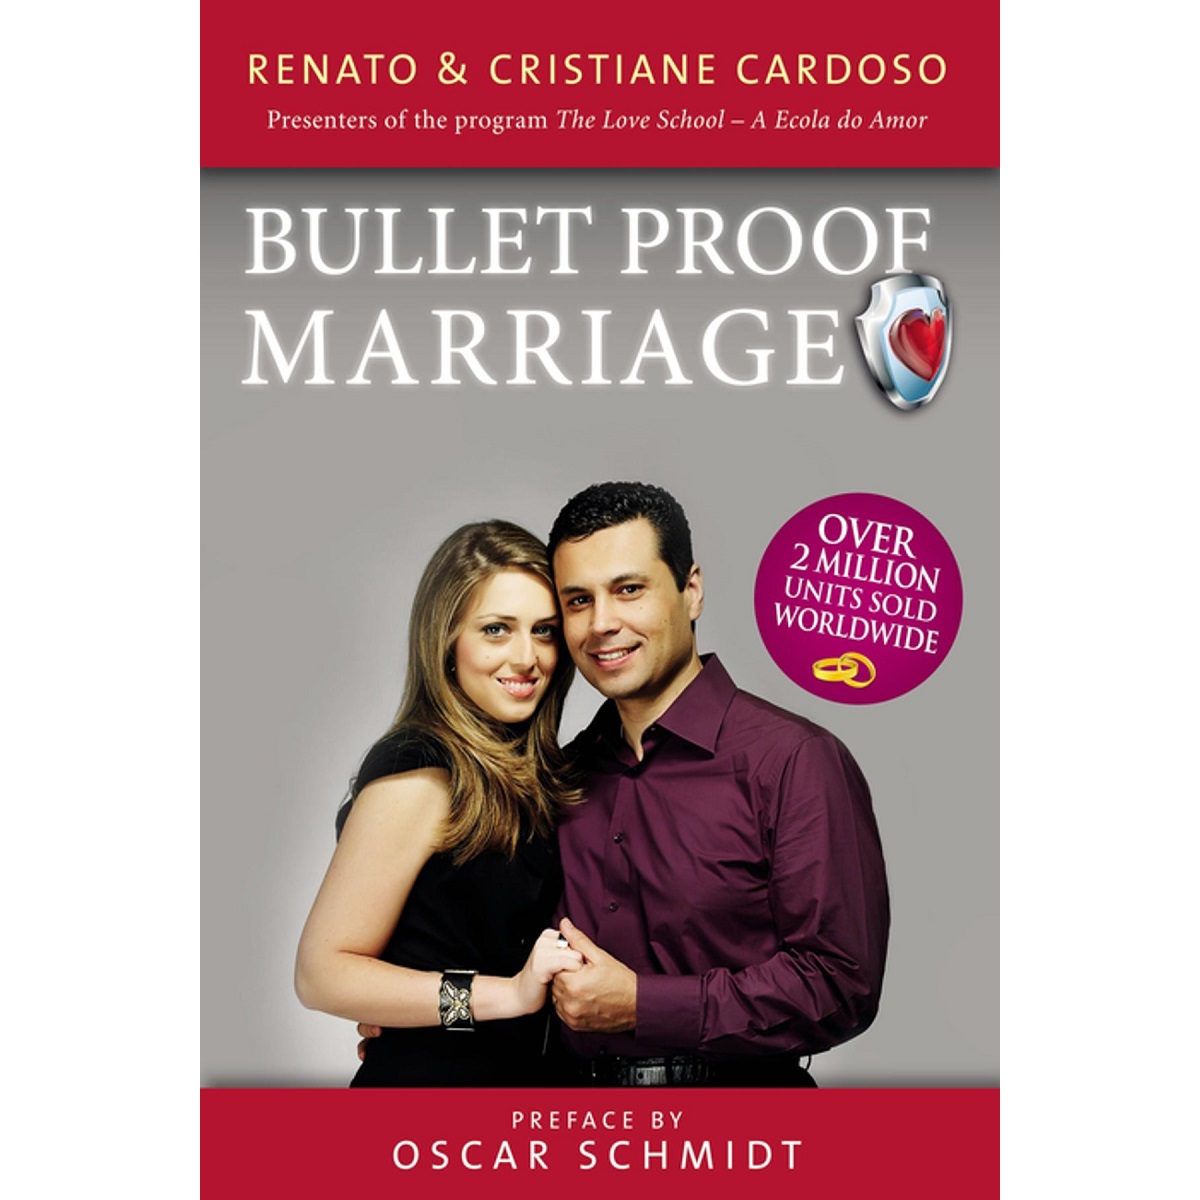 Bulletproof Marriage by Renato & Cristiane Cardoso